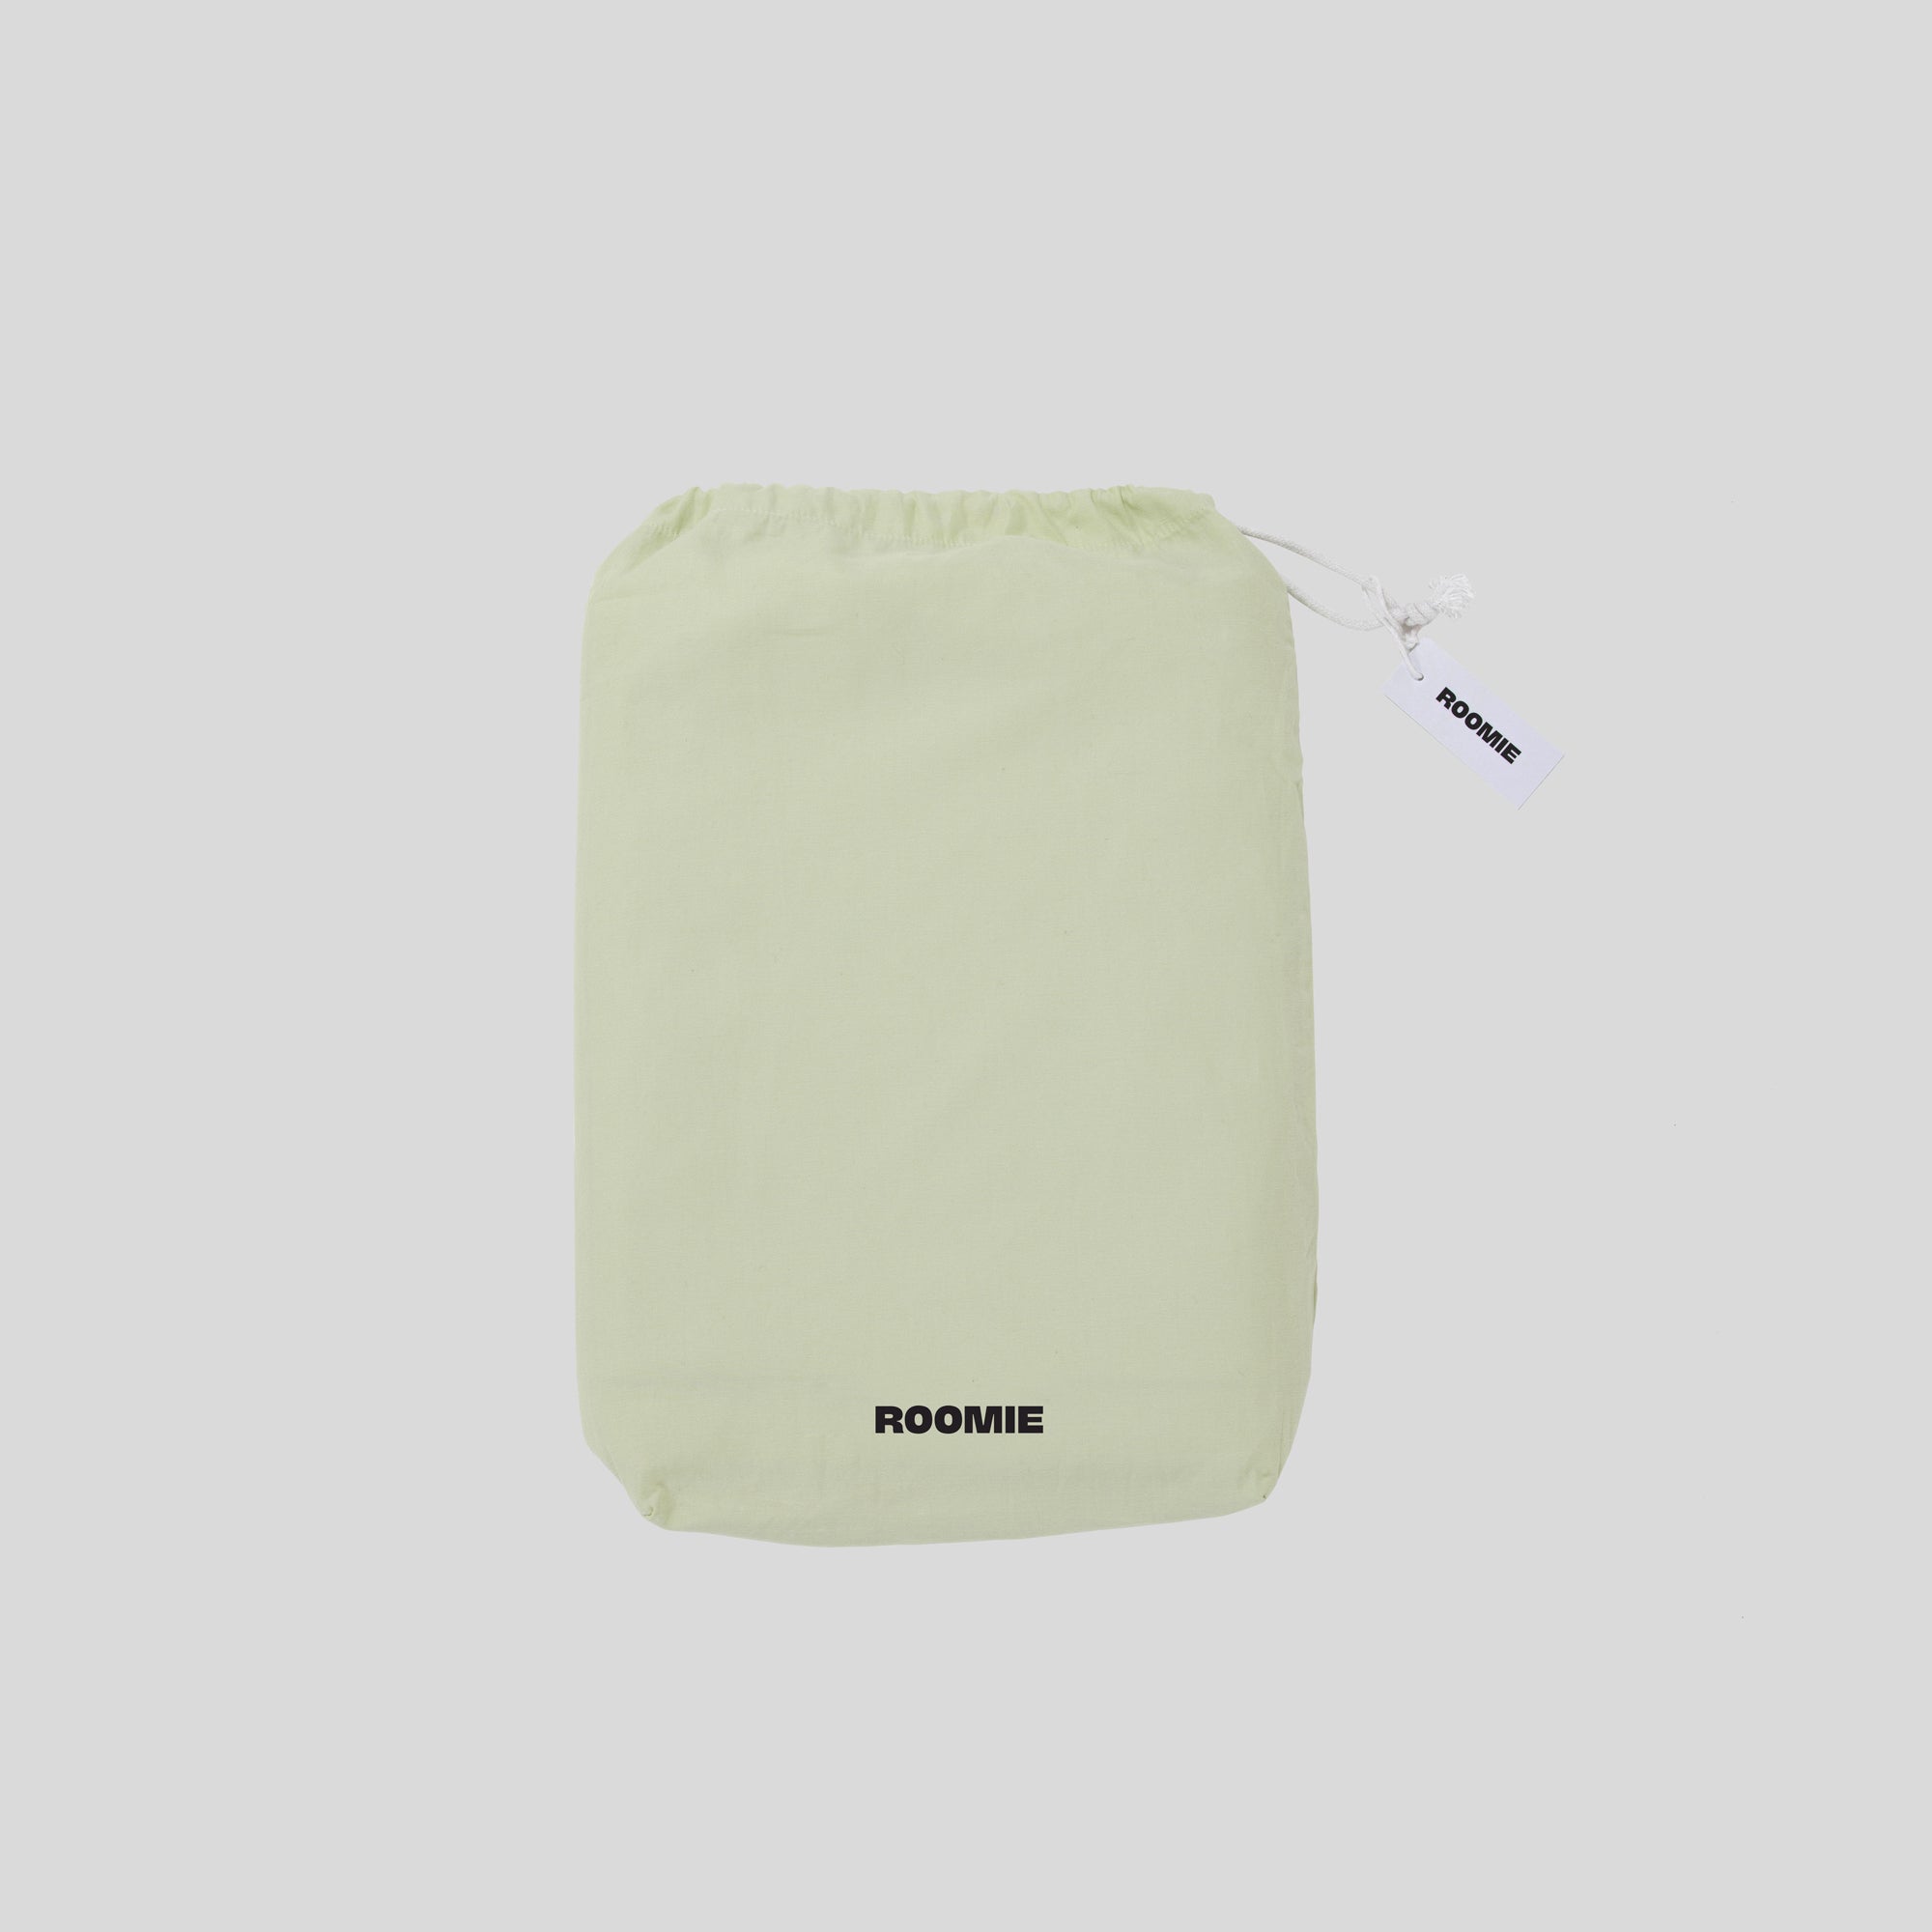 Roomie matcha green organic cotton bag